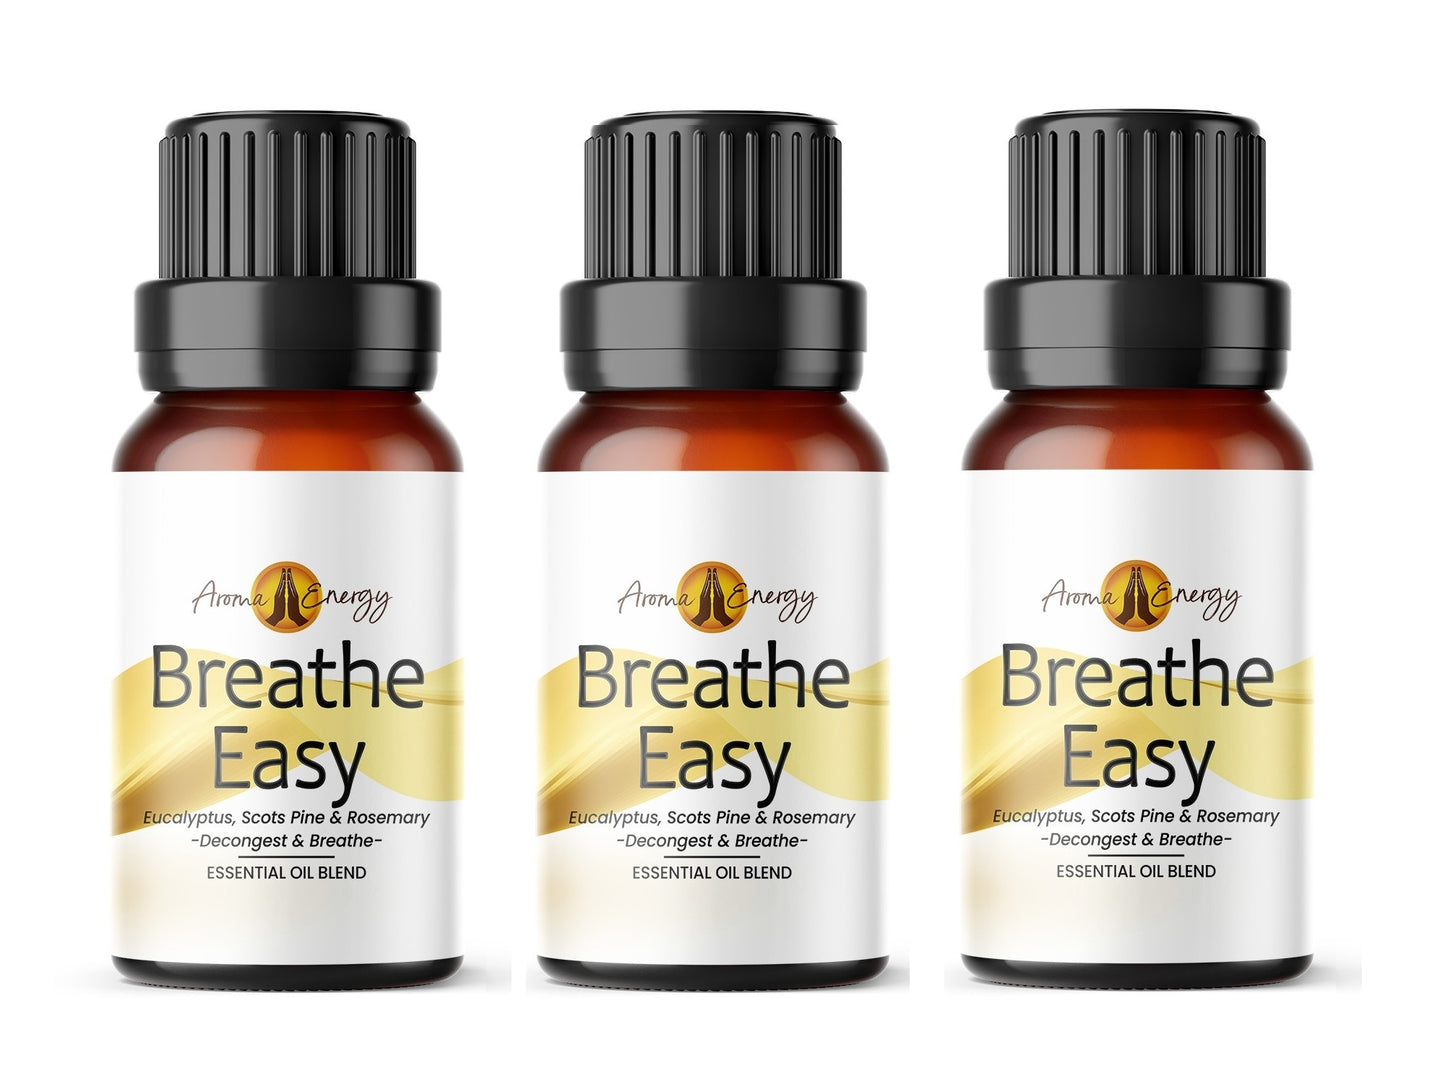 Breathe Easy Life Essential Oil - Aroma Energy